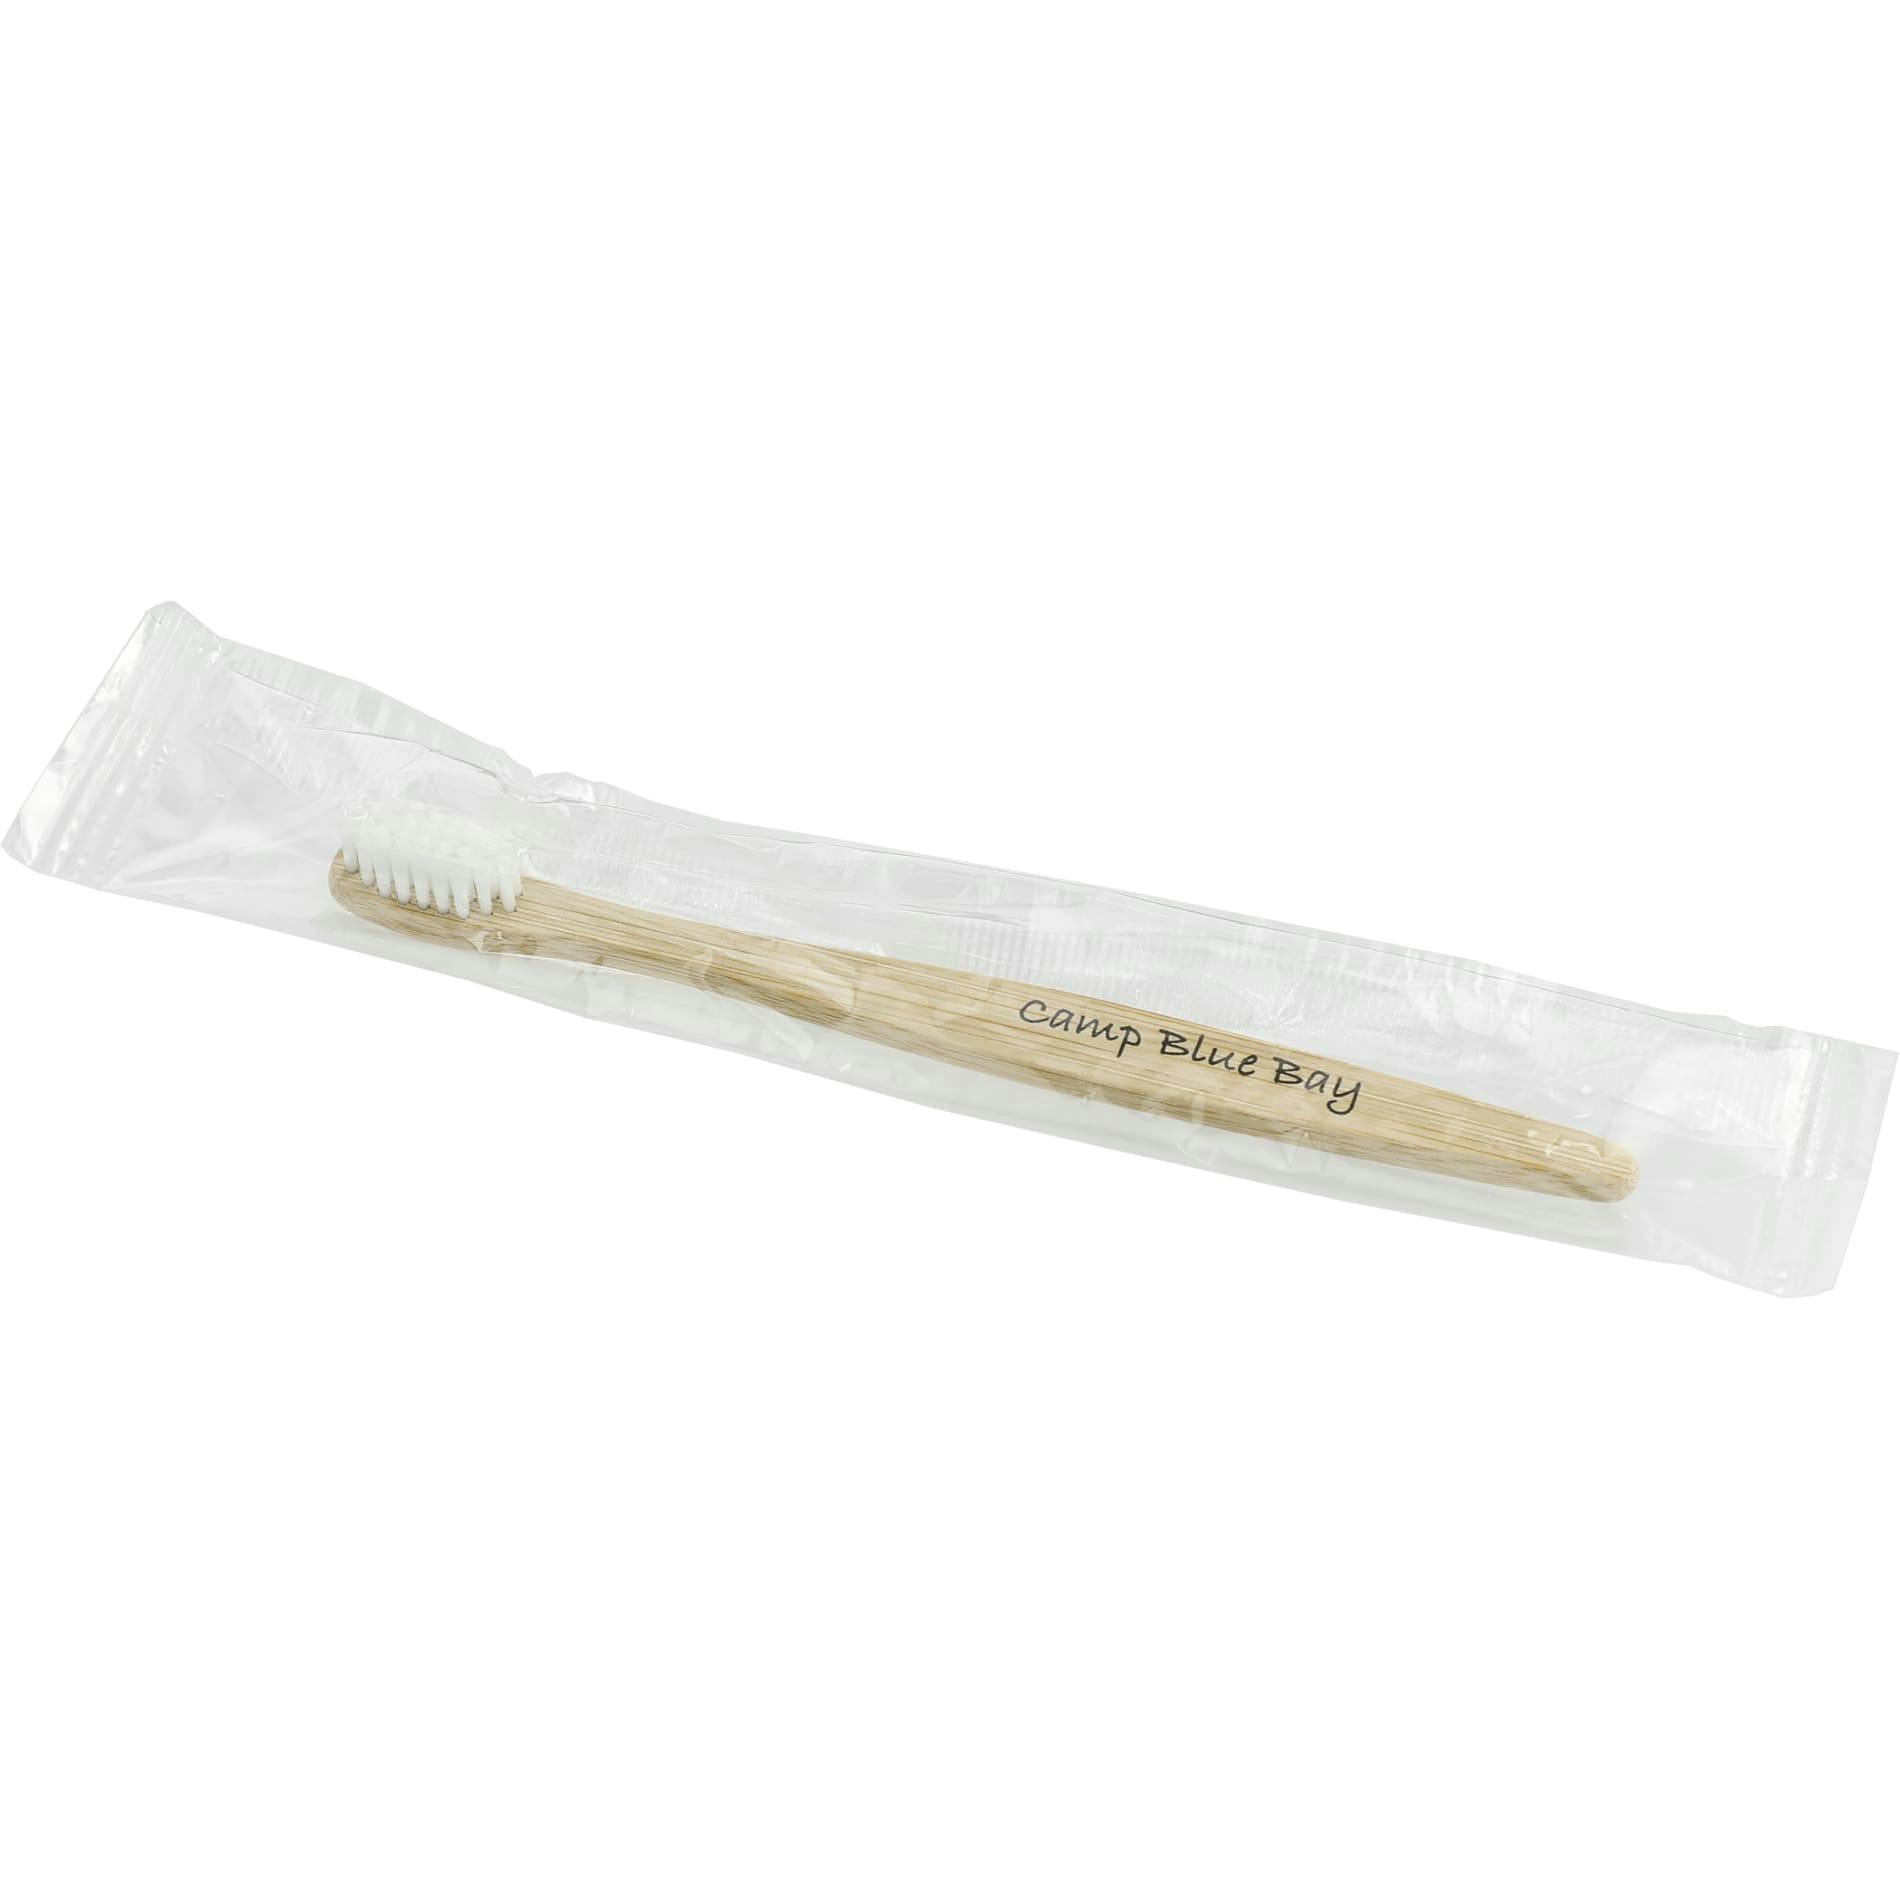 Bamboo Junior Toothbrush - additional Image 3